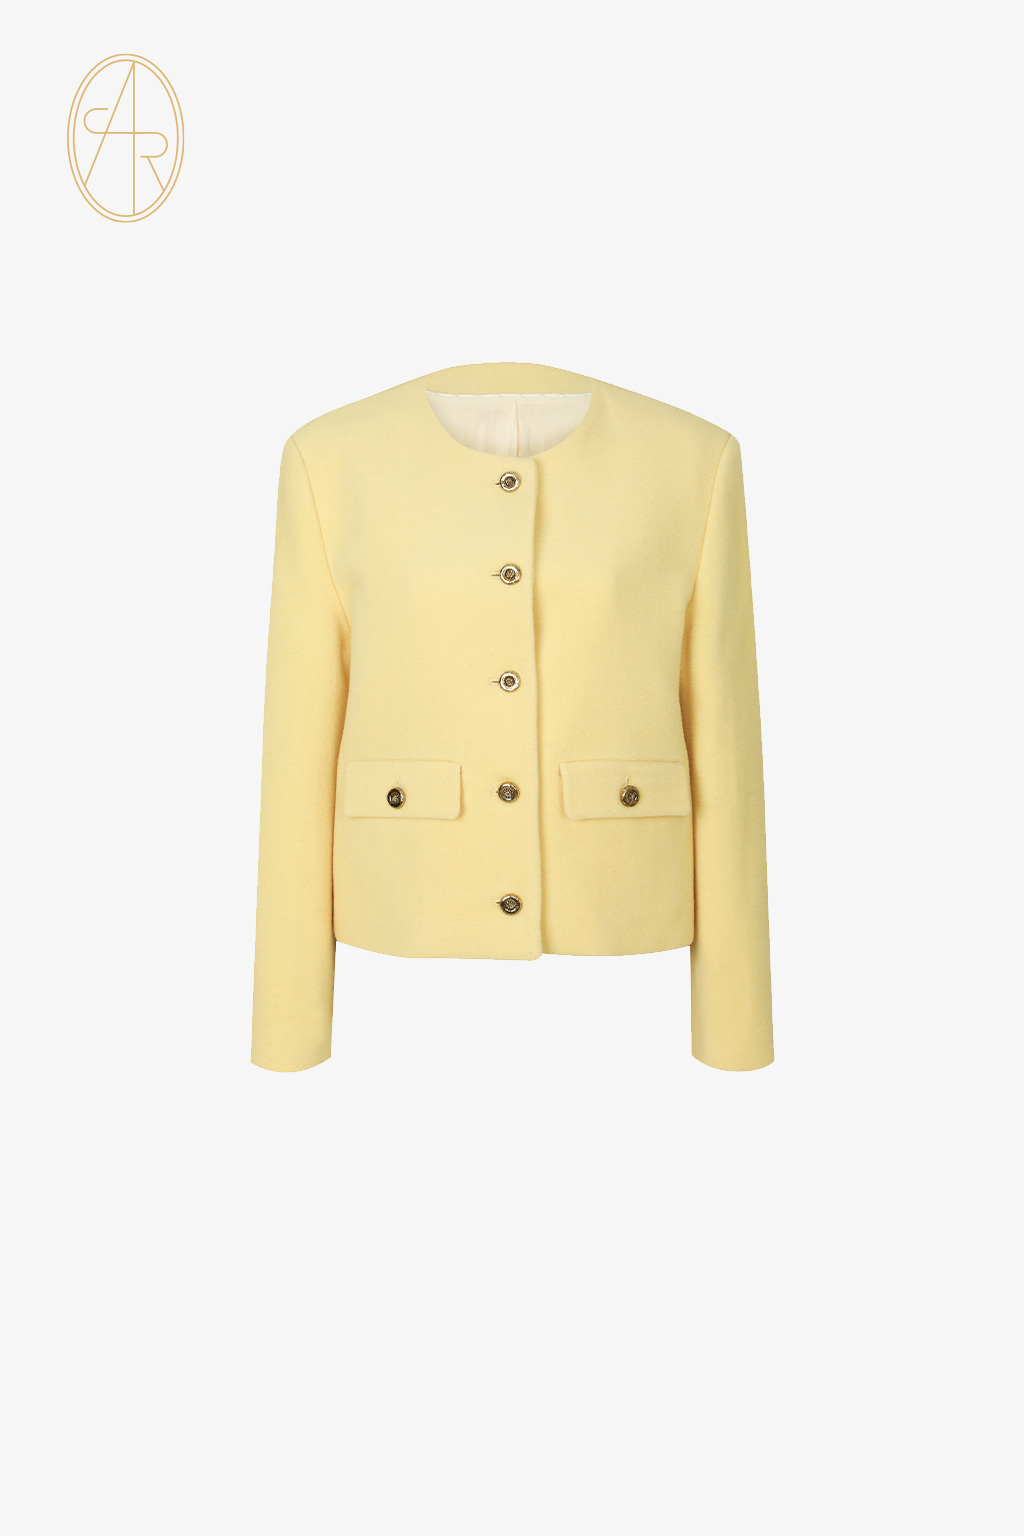 [exclusive] senne wool jacket (fabric from Japan) - pre order